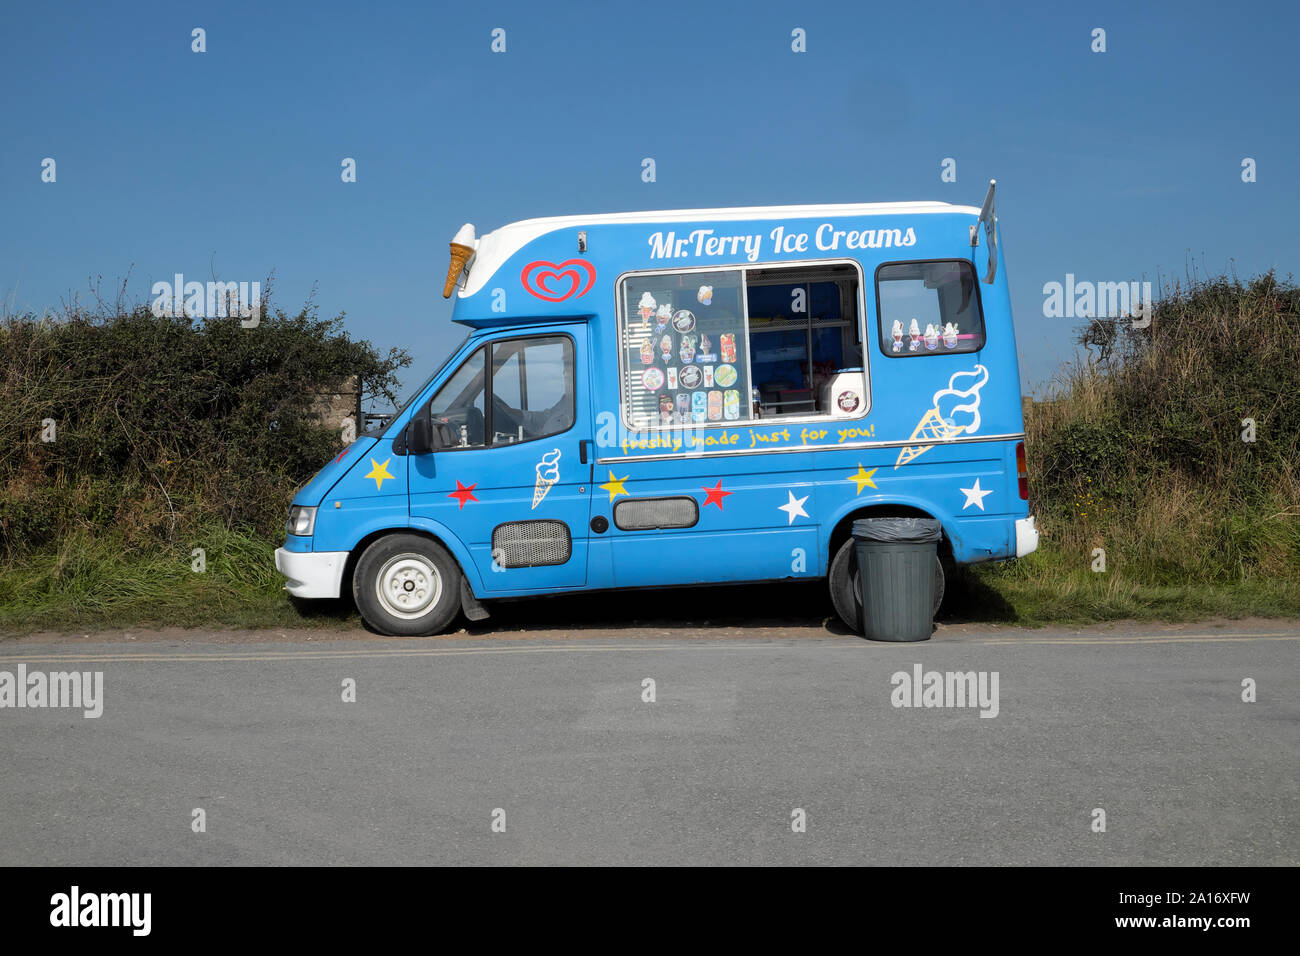 Blue ice cream van exterior view parked 